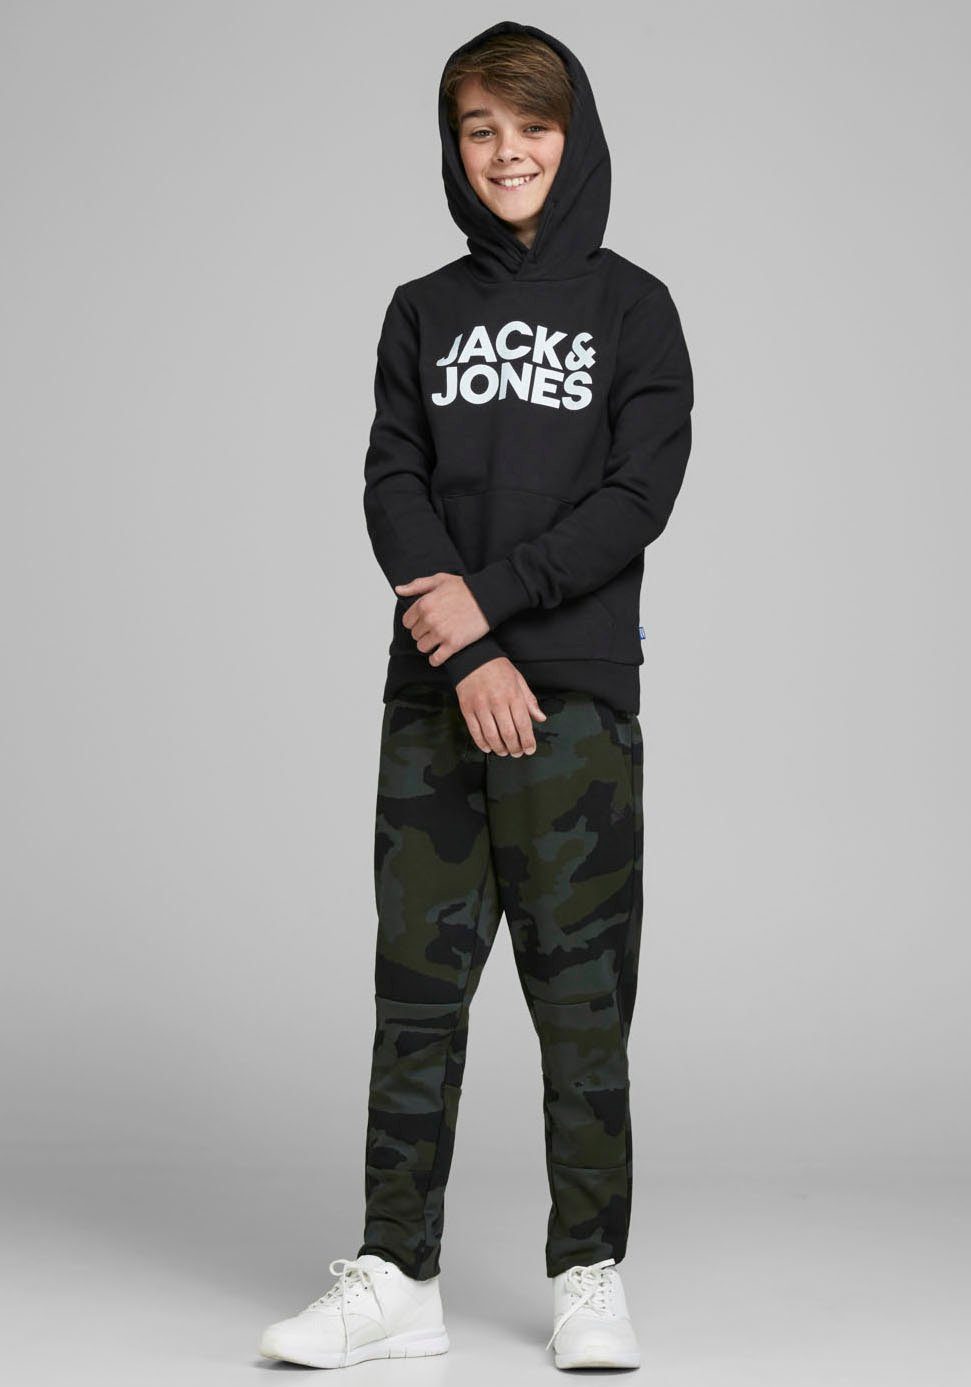 Jack & Jones Junior Kapuzensweatshirt Print HOOD SWEAT black/Large LOGO JJECORP